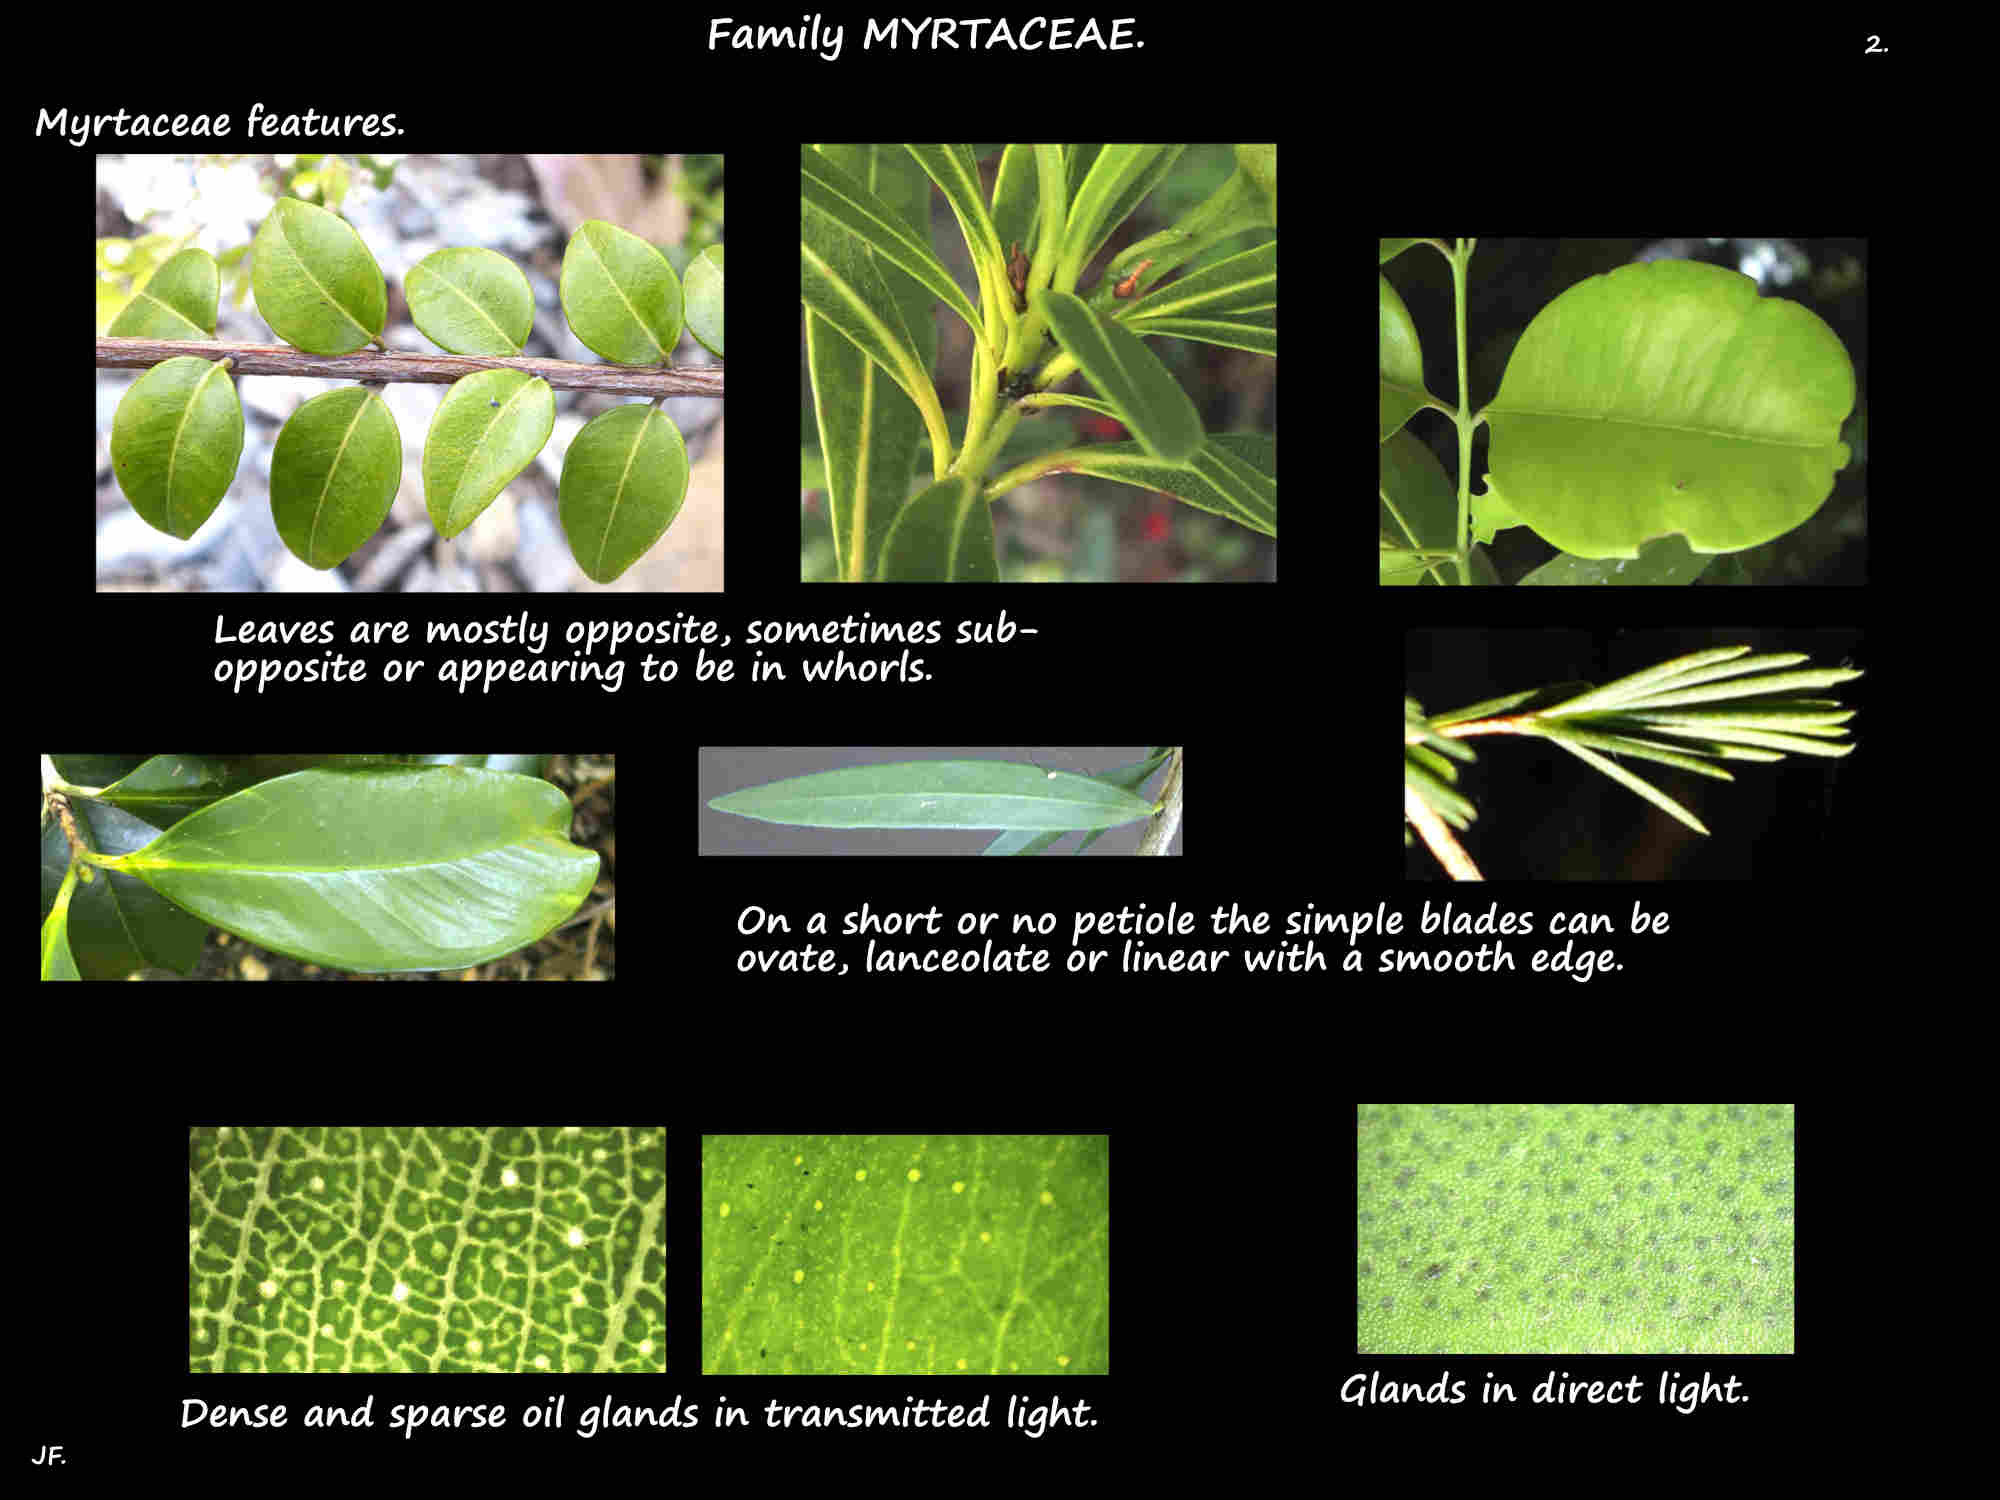 2 Oil glands in Myrtaceae leaves